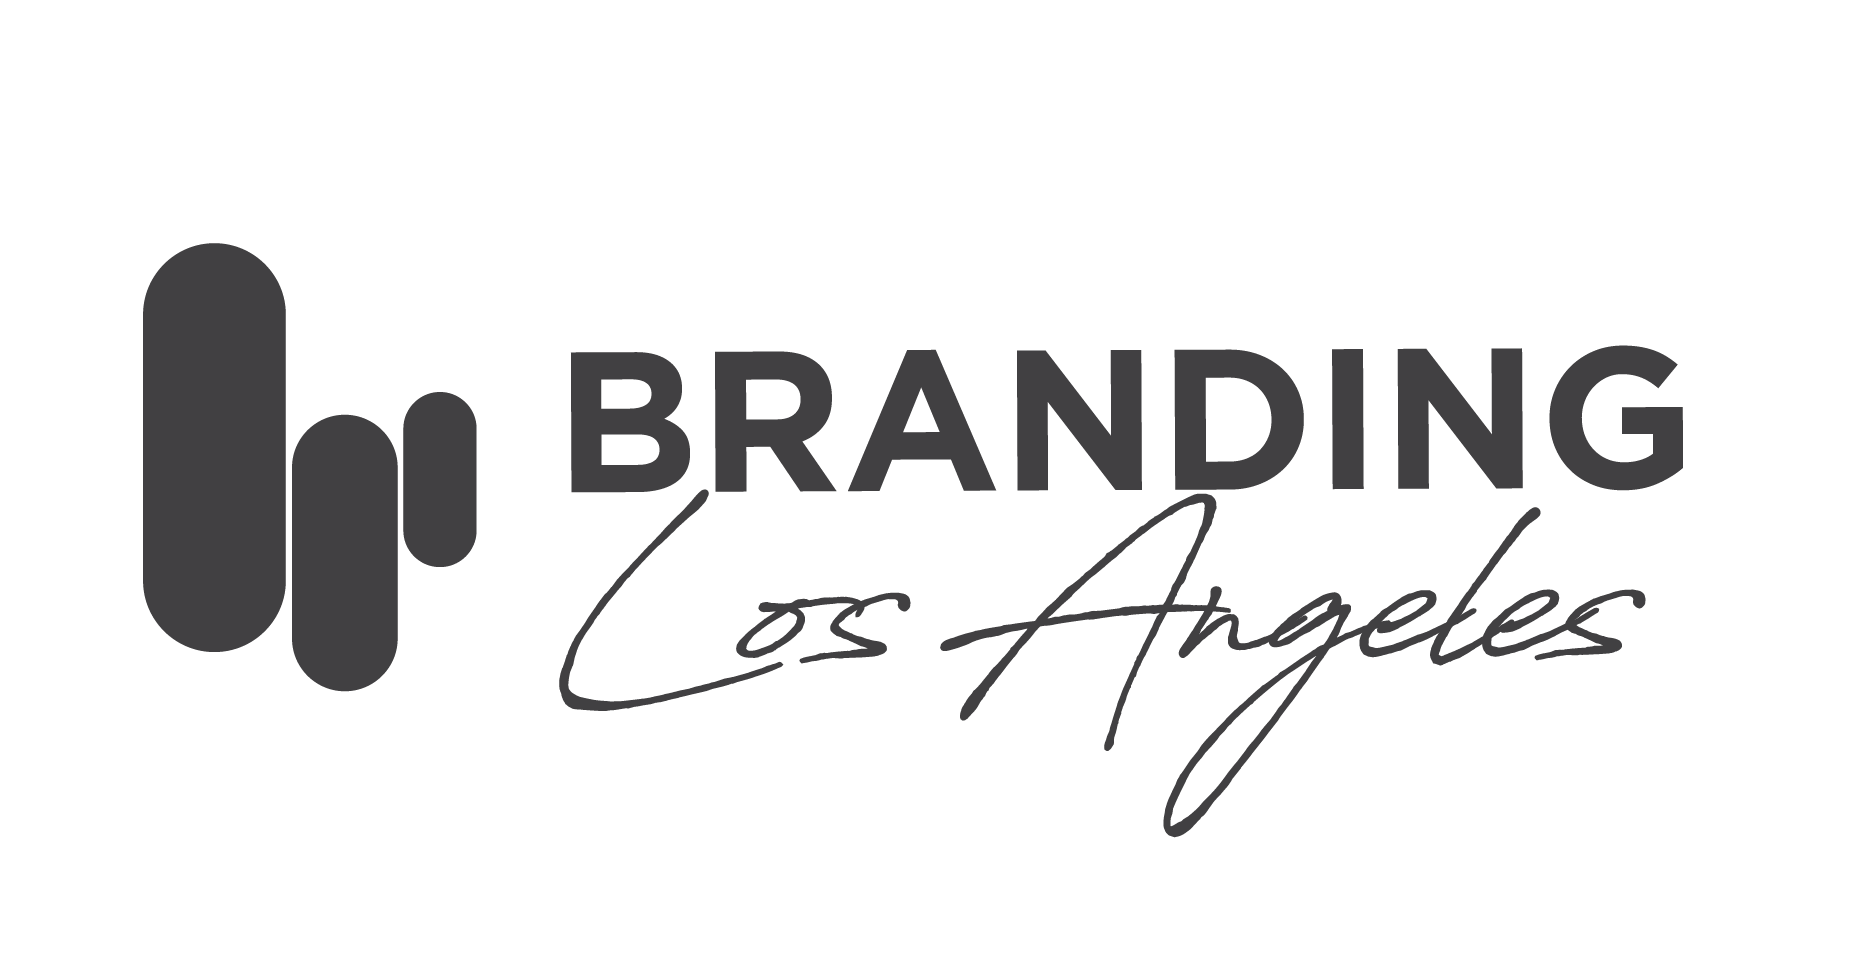 Branding Los Angeles Logo